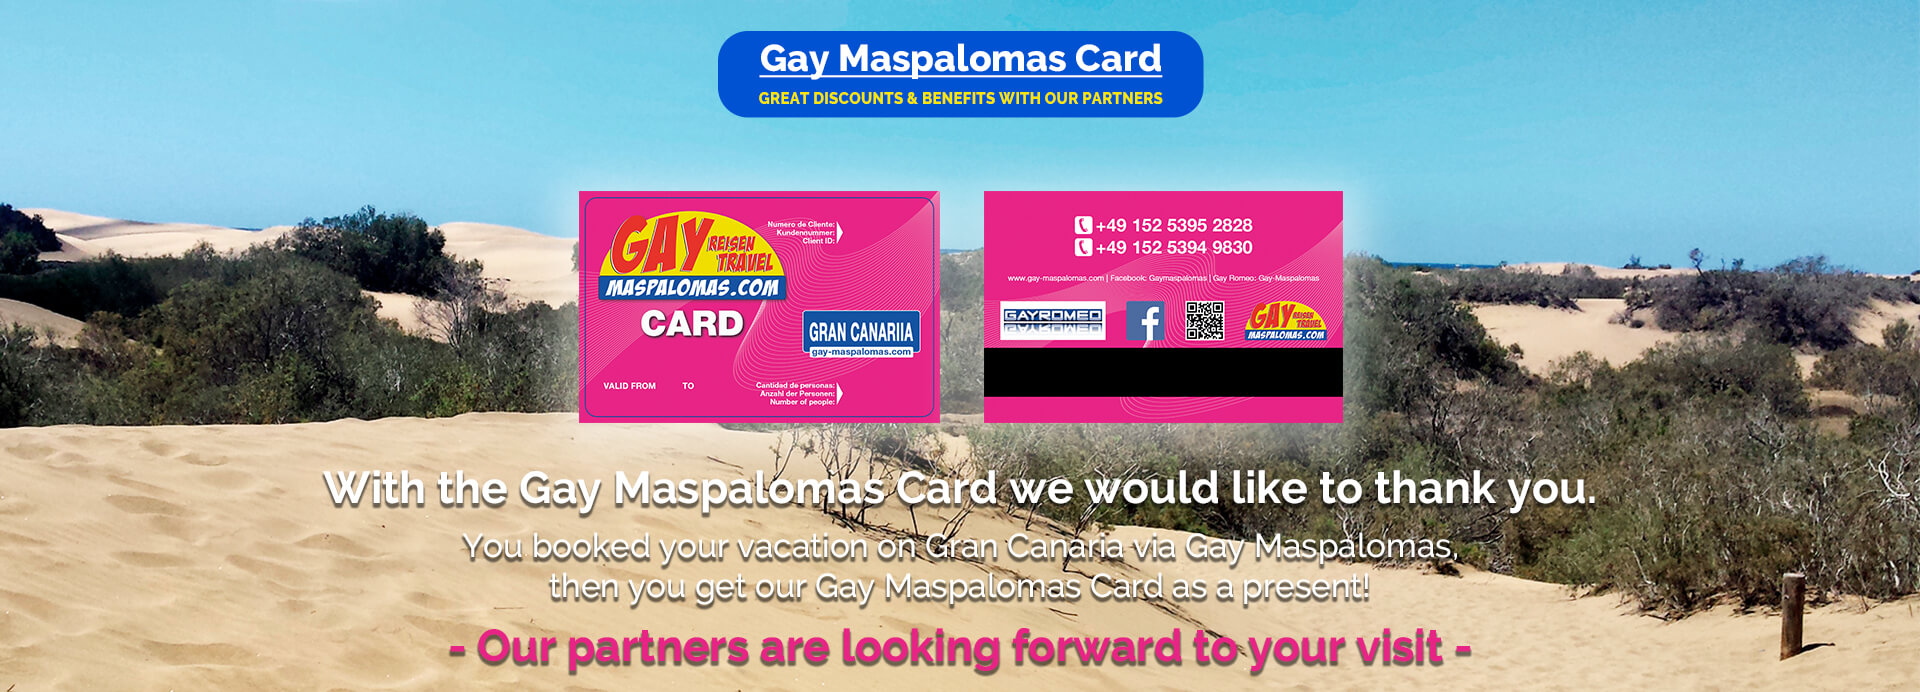 Gay Maspalomas Card